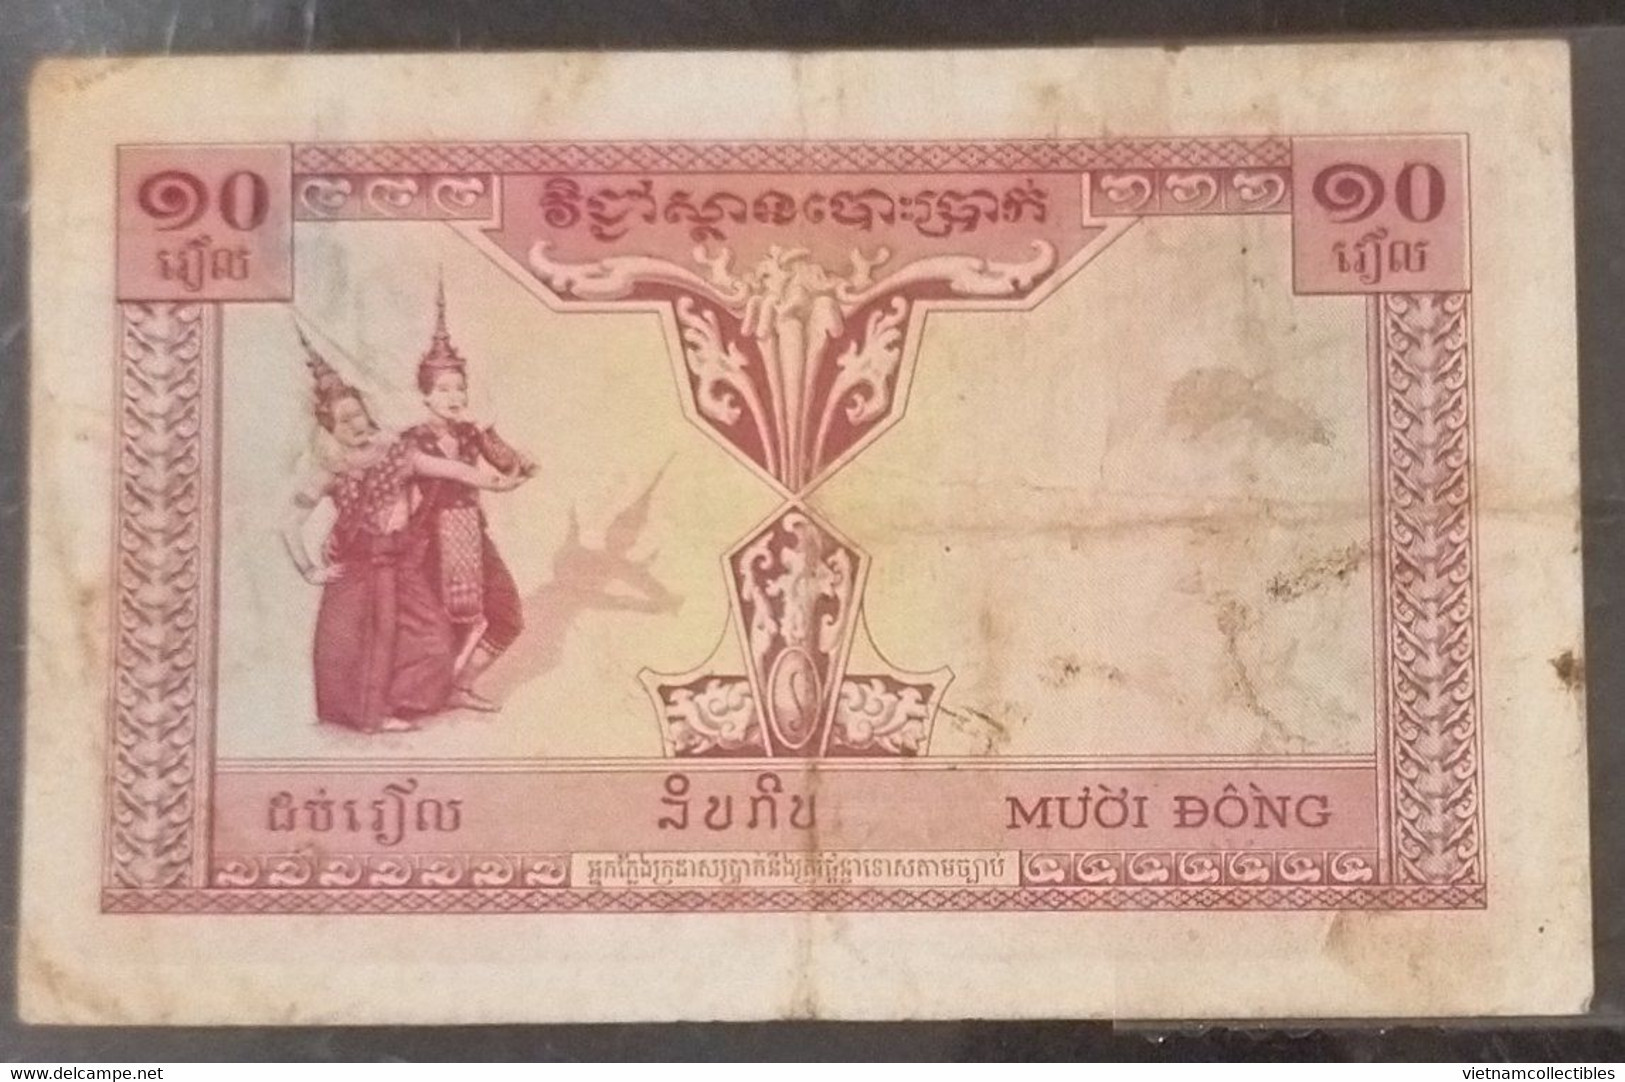 French Indochine Indochina Vietnam Viet Nam Laos Cambodia 1 Piastre VF Banknote Note 1953 - Pick # 96a / 2 Photos - Indochina